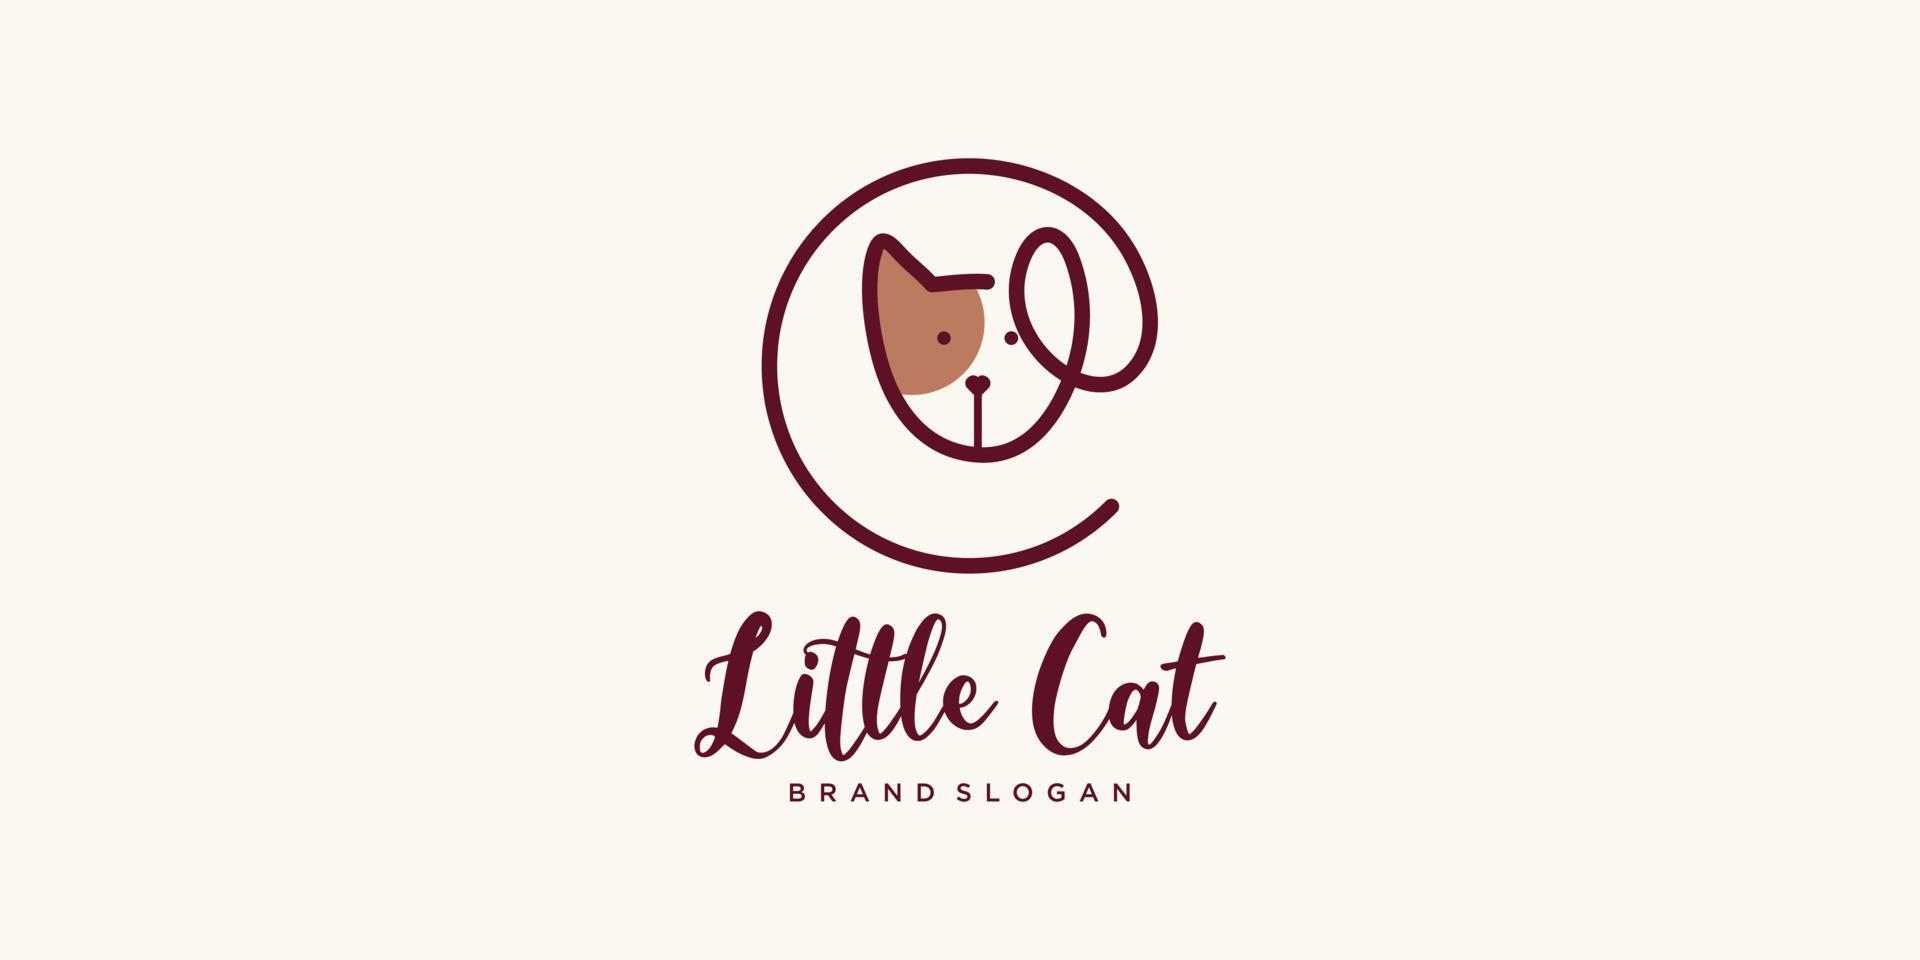 Cat logo design with creative line style Premium Vector